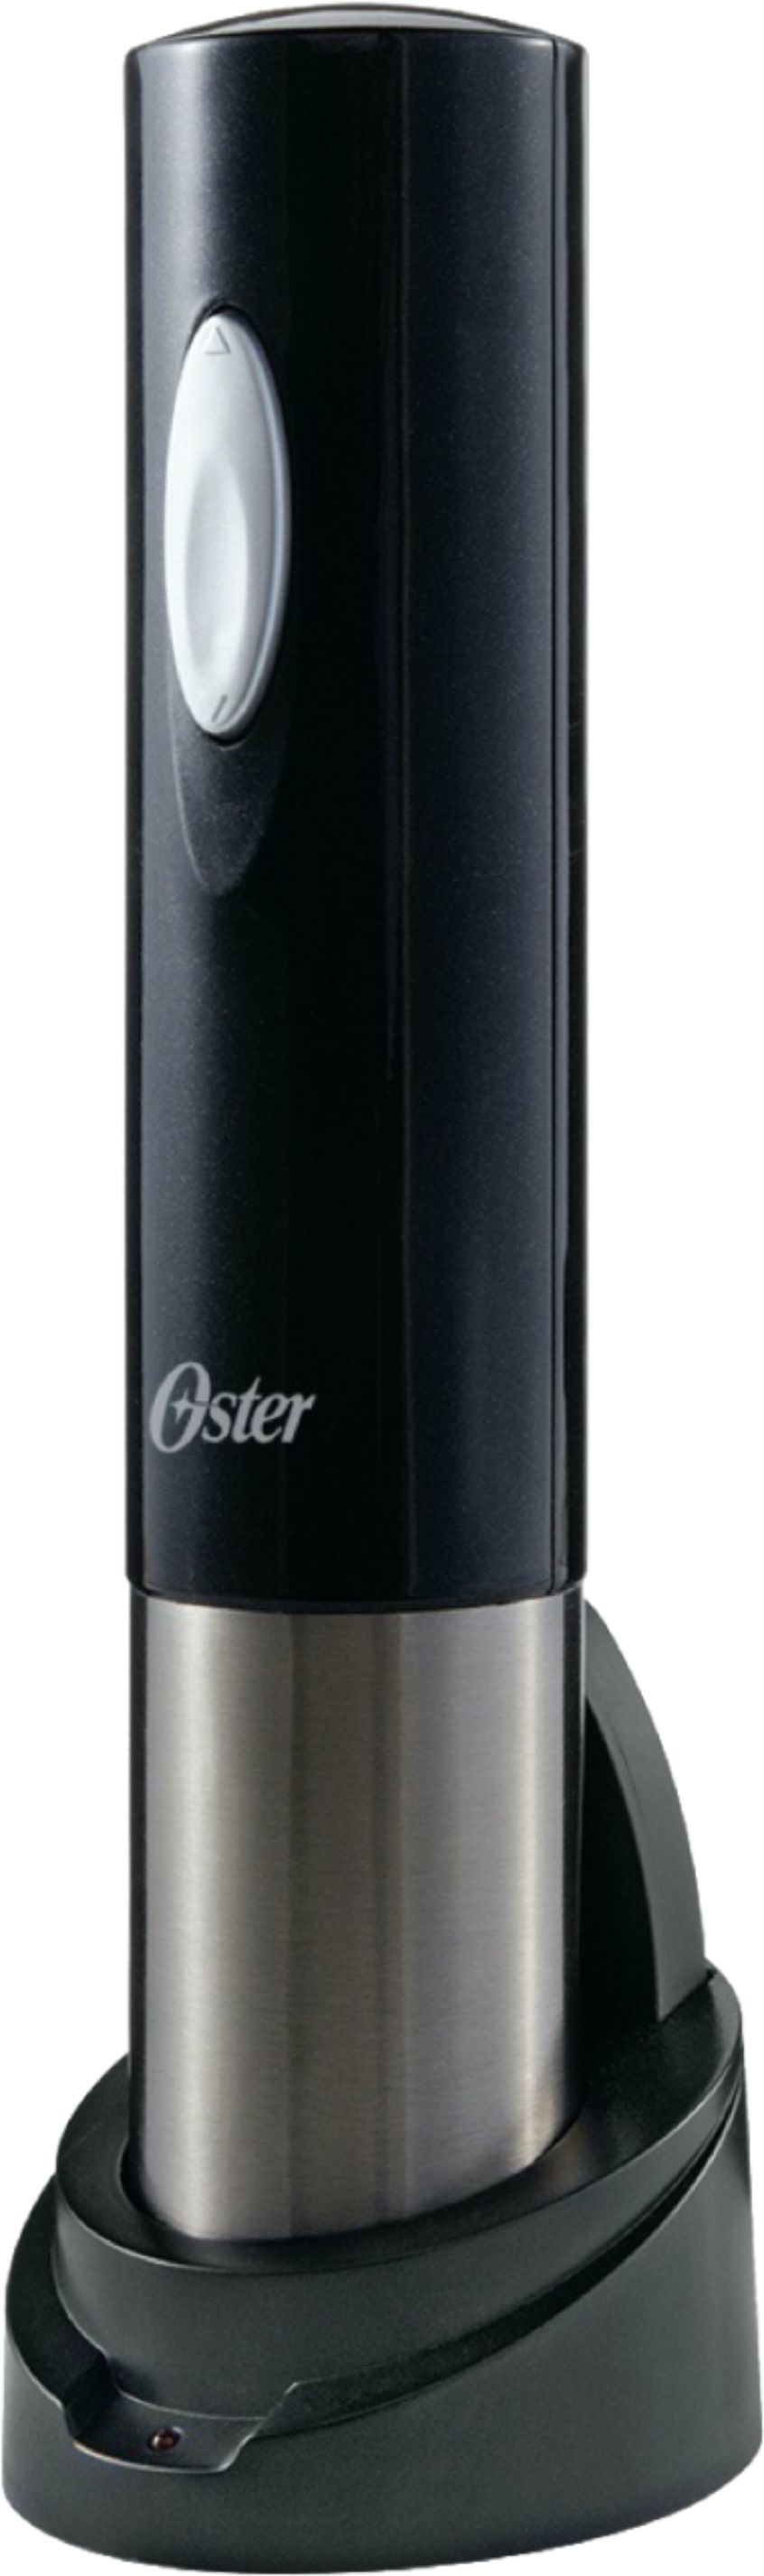 Oster FPSTES1000 Electric Spiralizer - Black for sale online